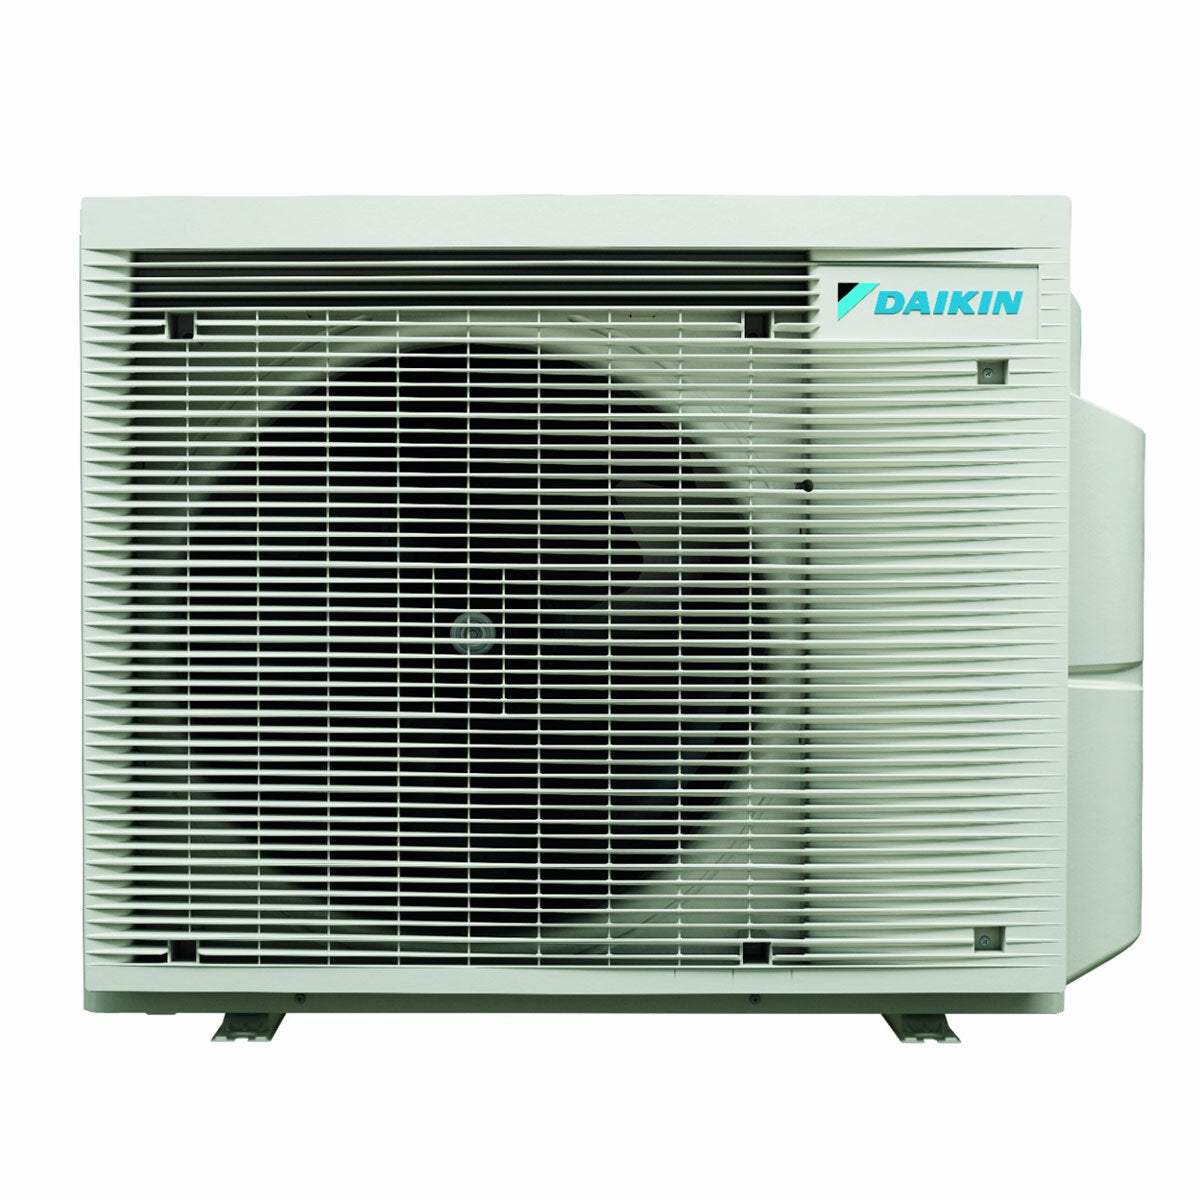 Daikin Multi+ trial split air conditioning and domestic hot water system - Emura 3 white internal units 9000+9000+12000 BTU - 90 l tank